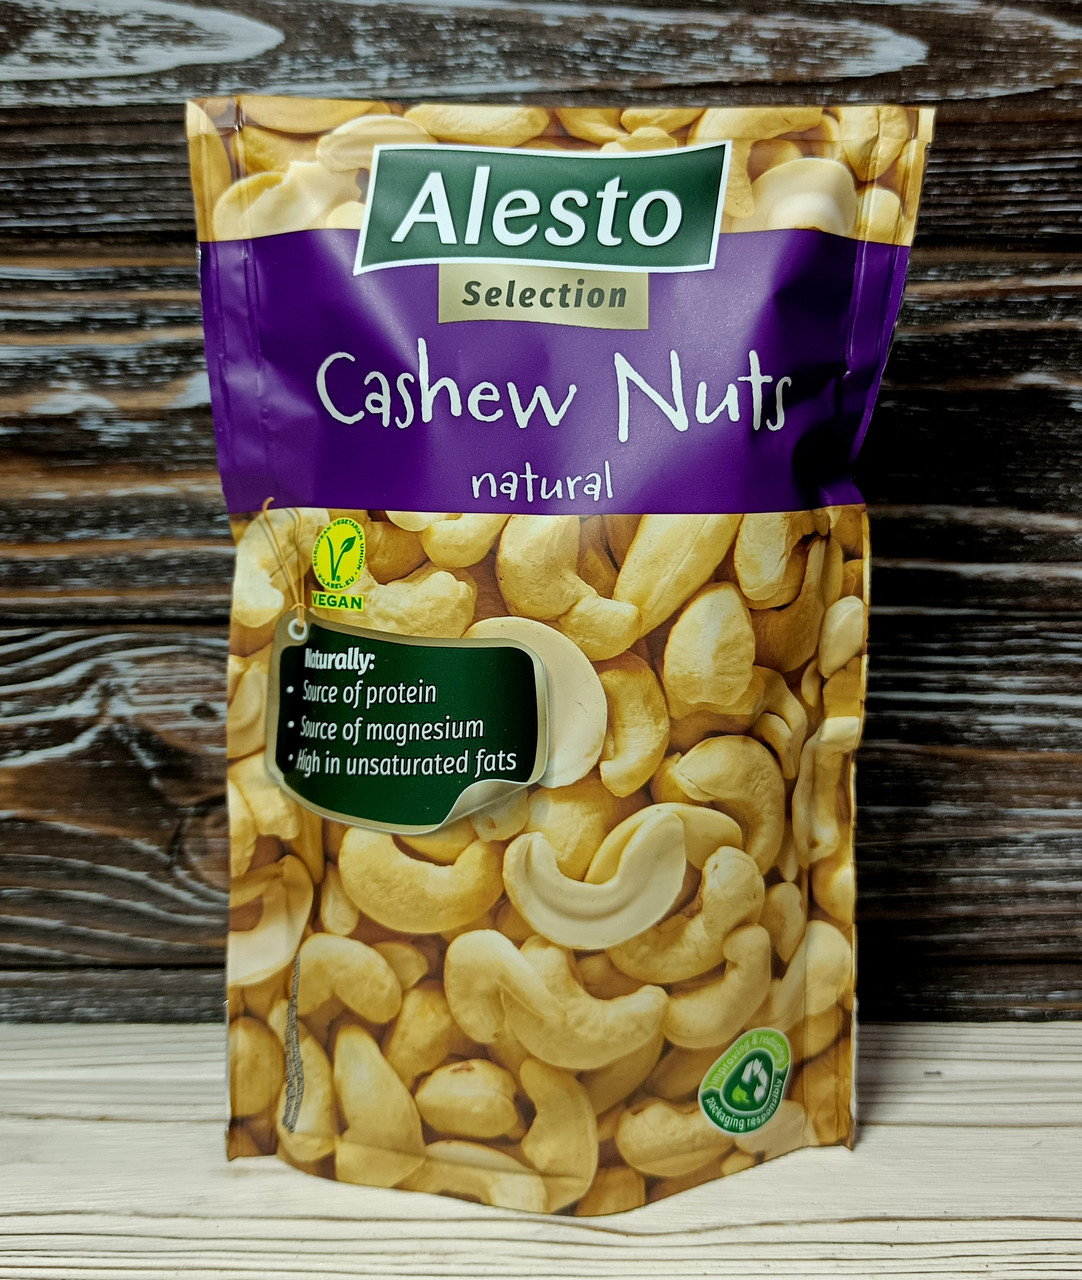 Diese Woche beliebt Орехи кешью Alesto Cashew Nuts (58573) цена: 130 г ₴, купить (ID#1984978056), 200 на